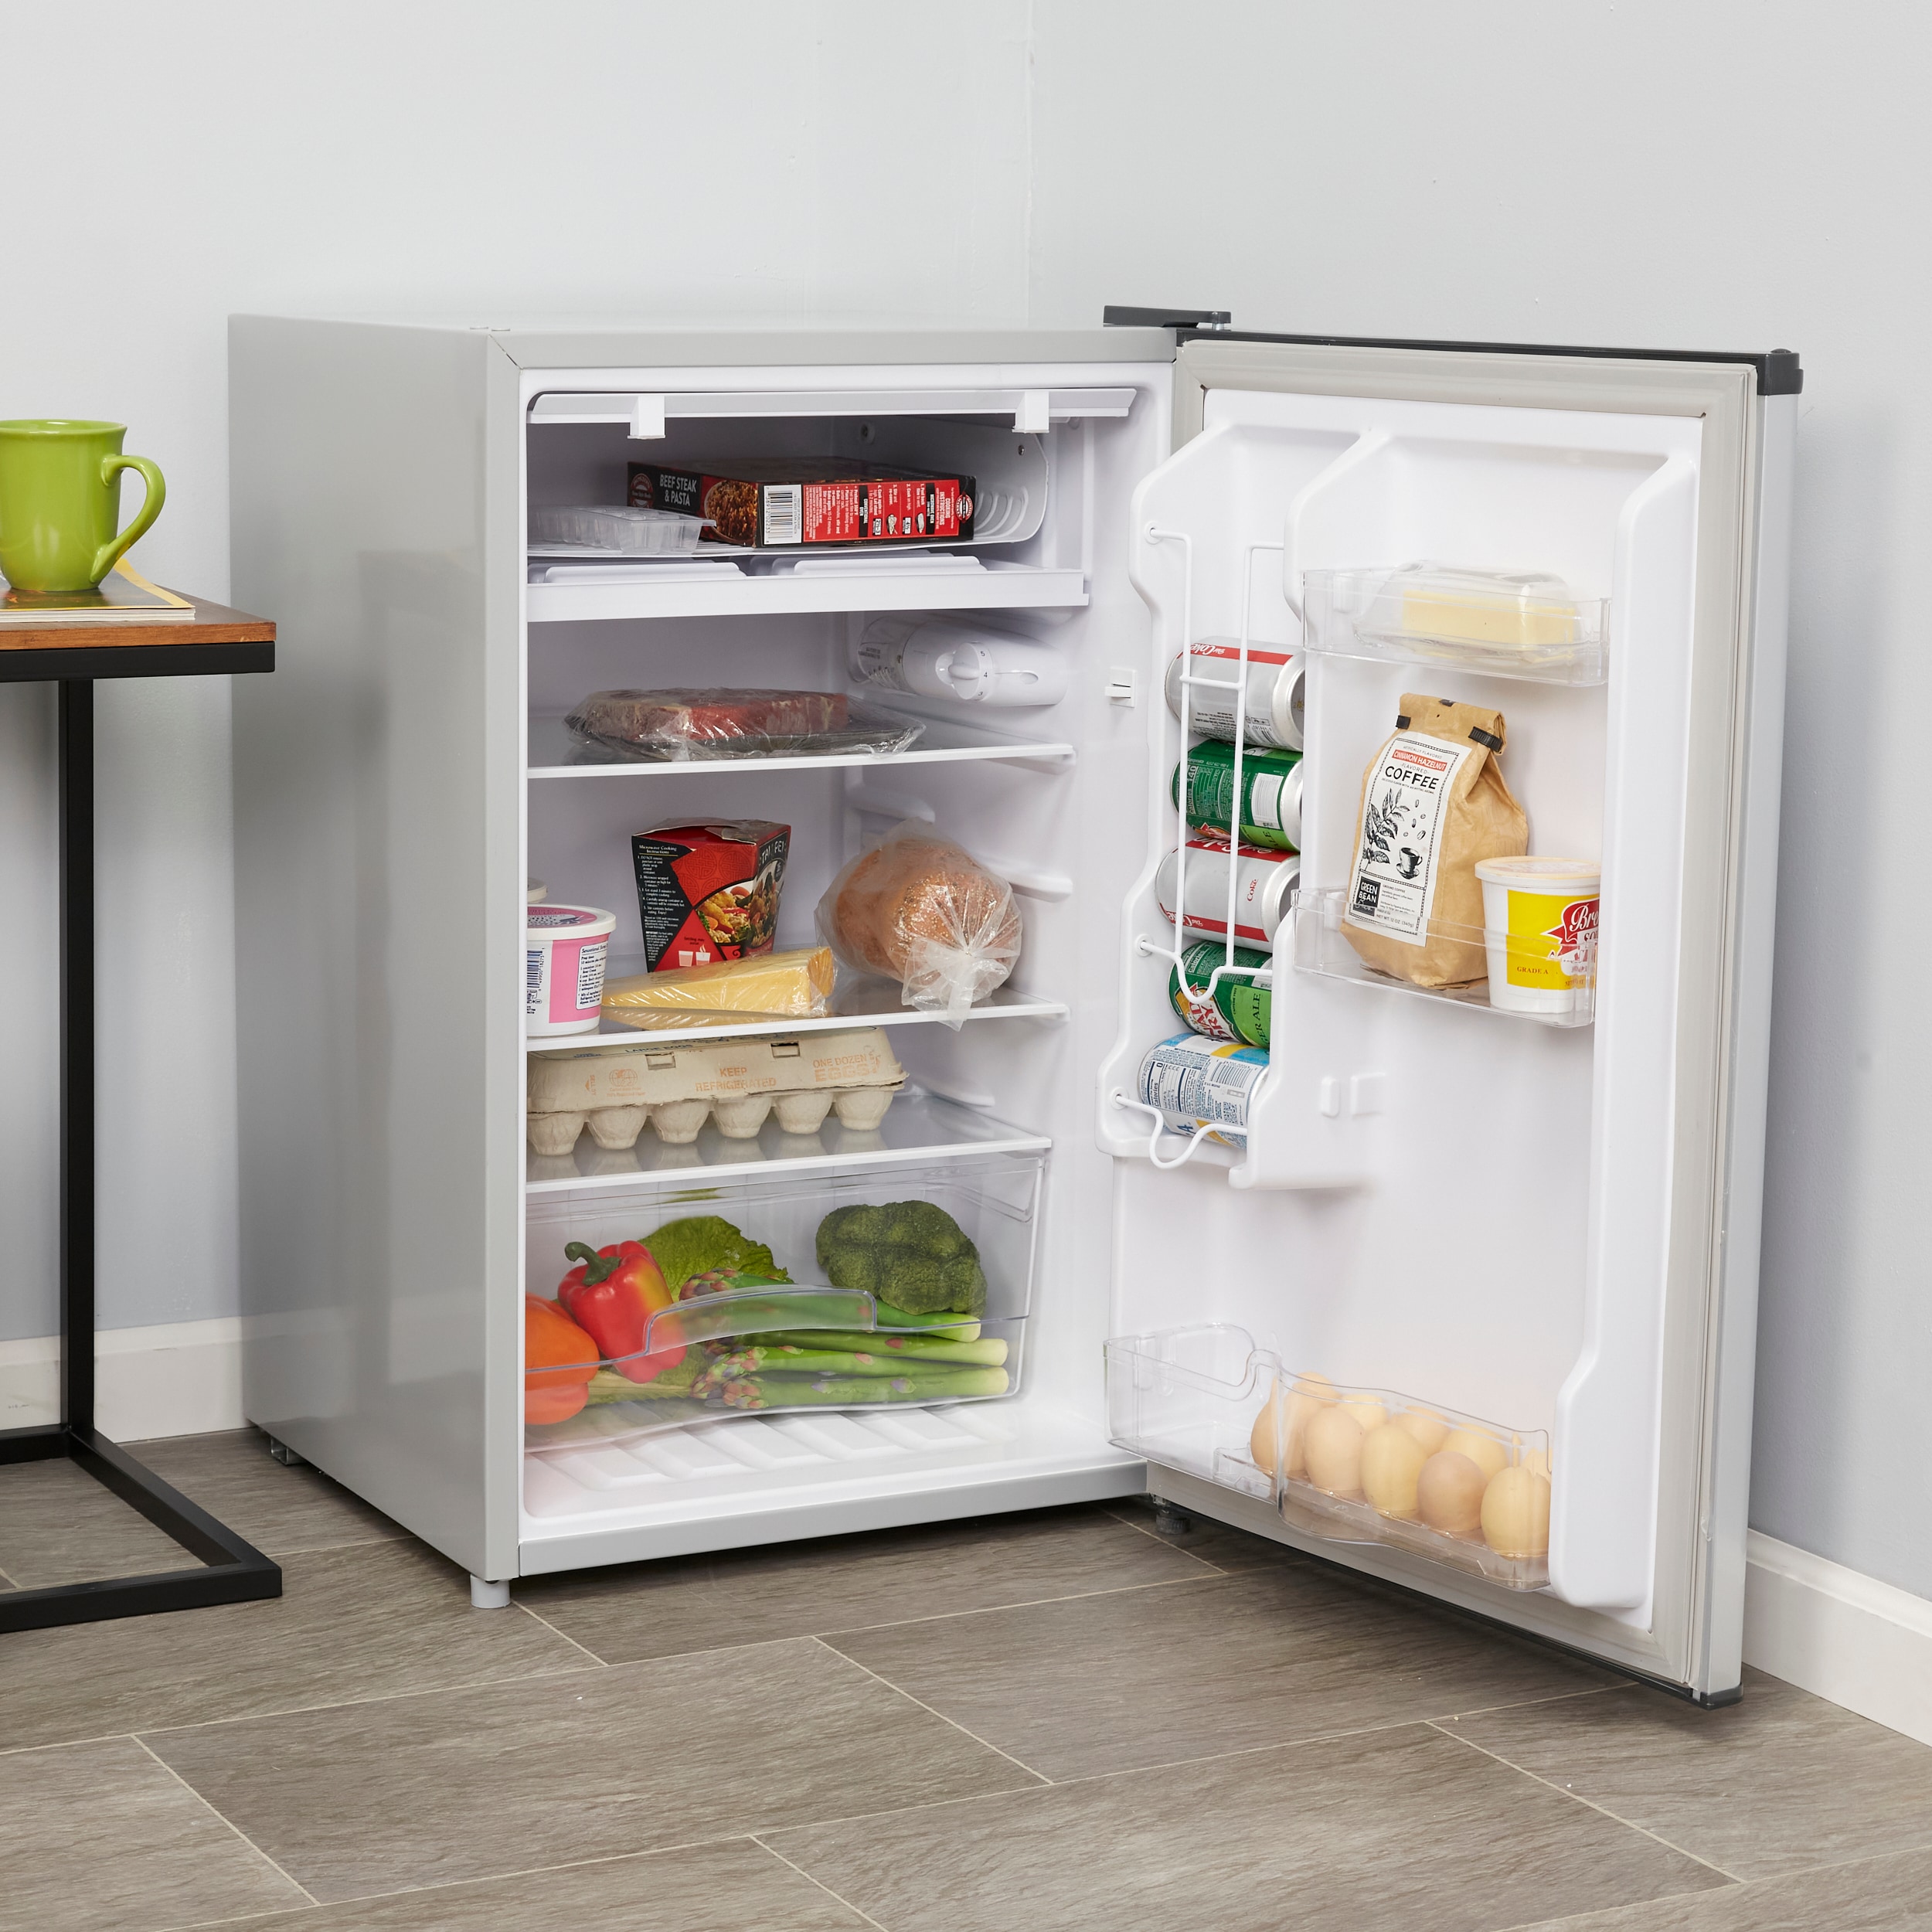 Black+decker Compact Refrigerator 4.3 Cu. Ft. With True Freezer